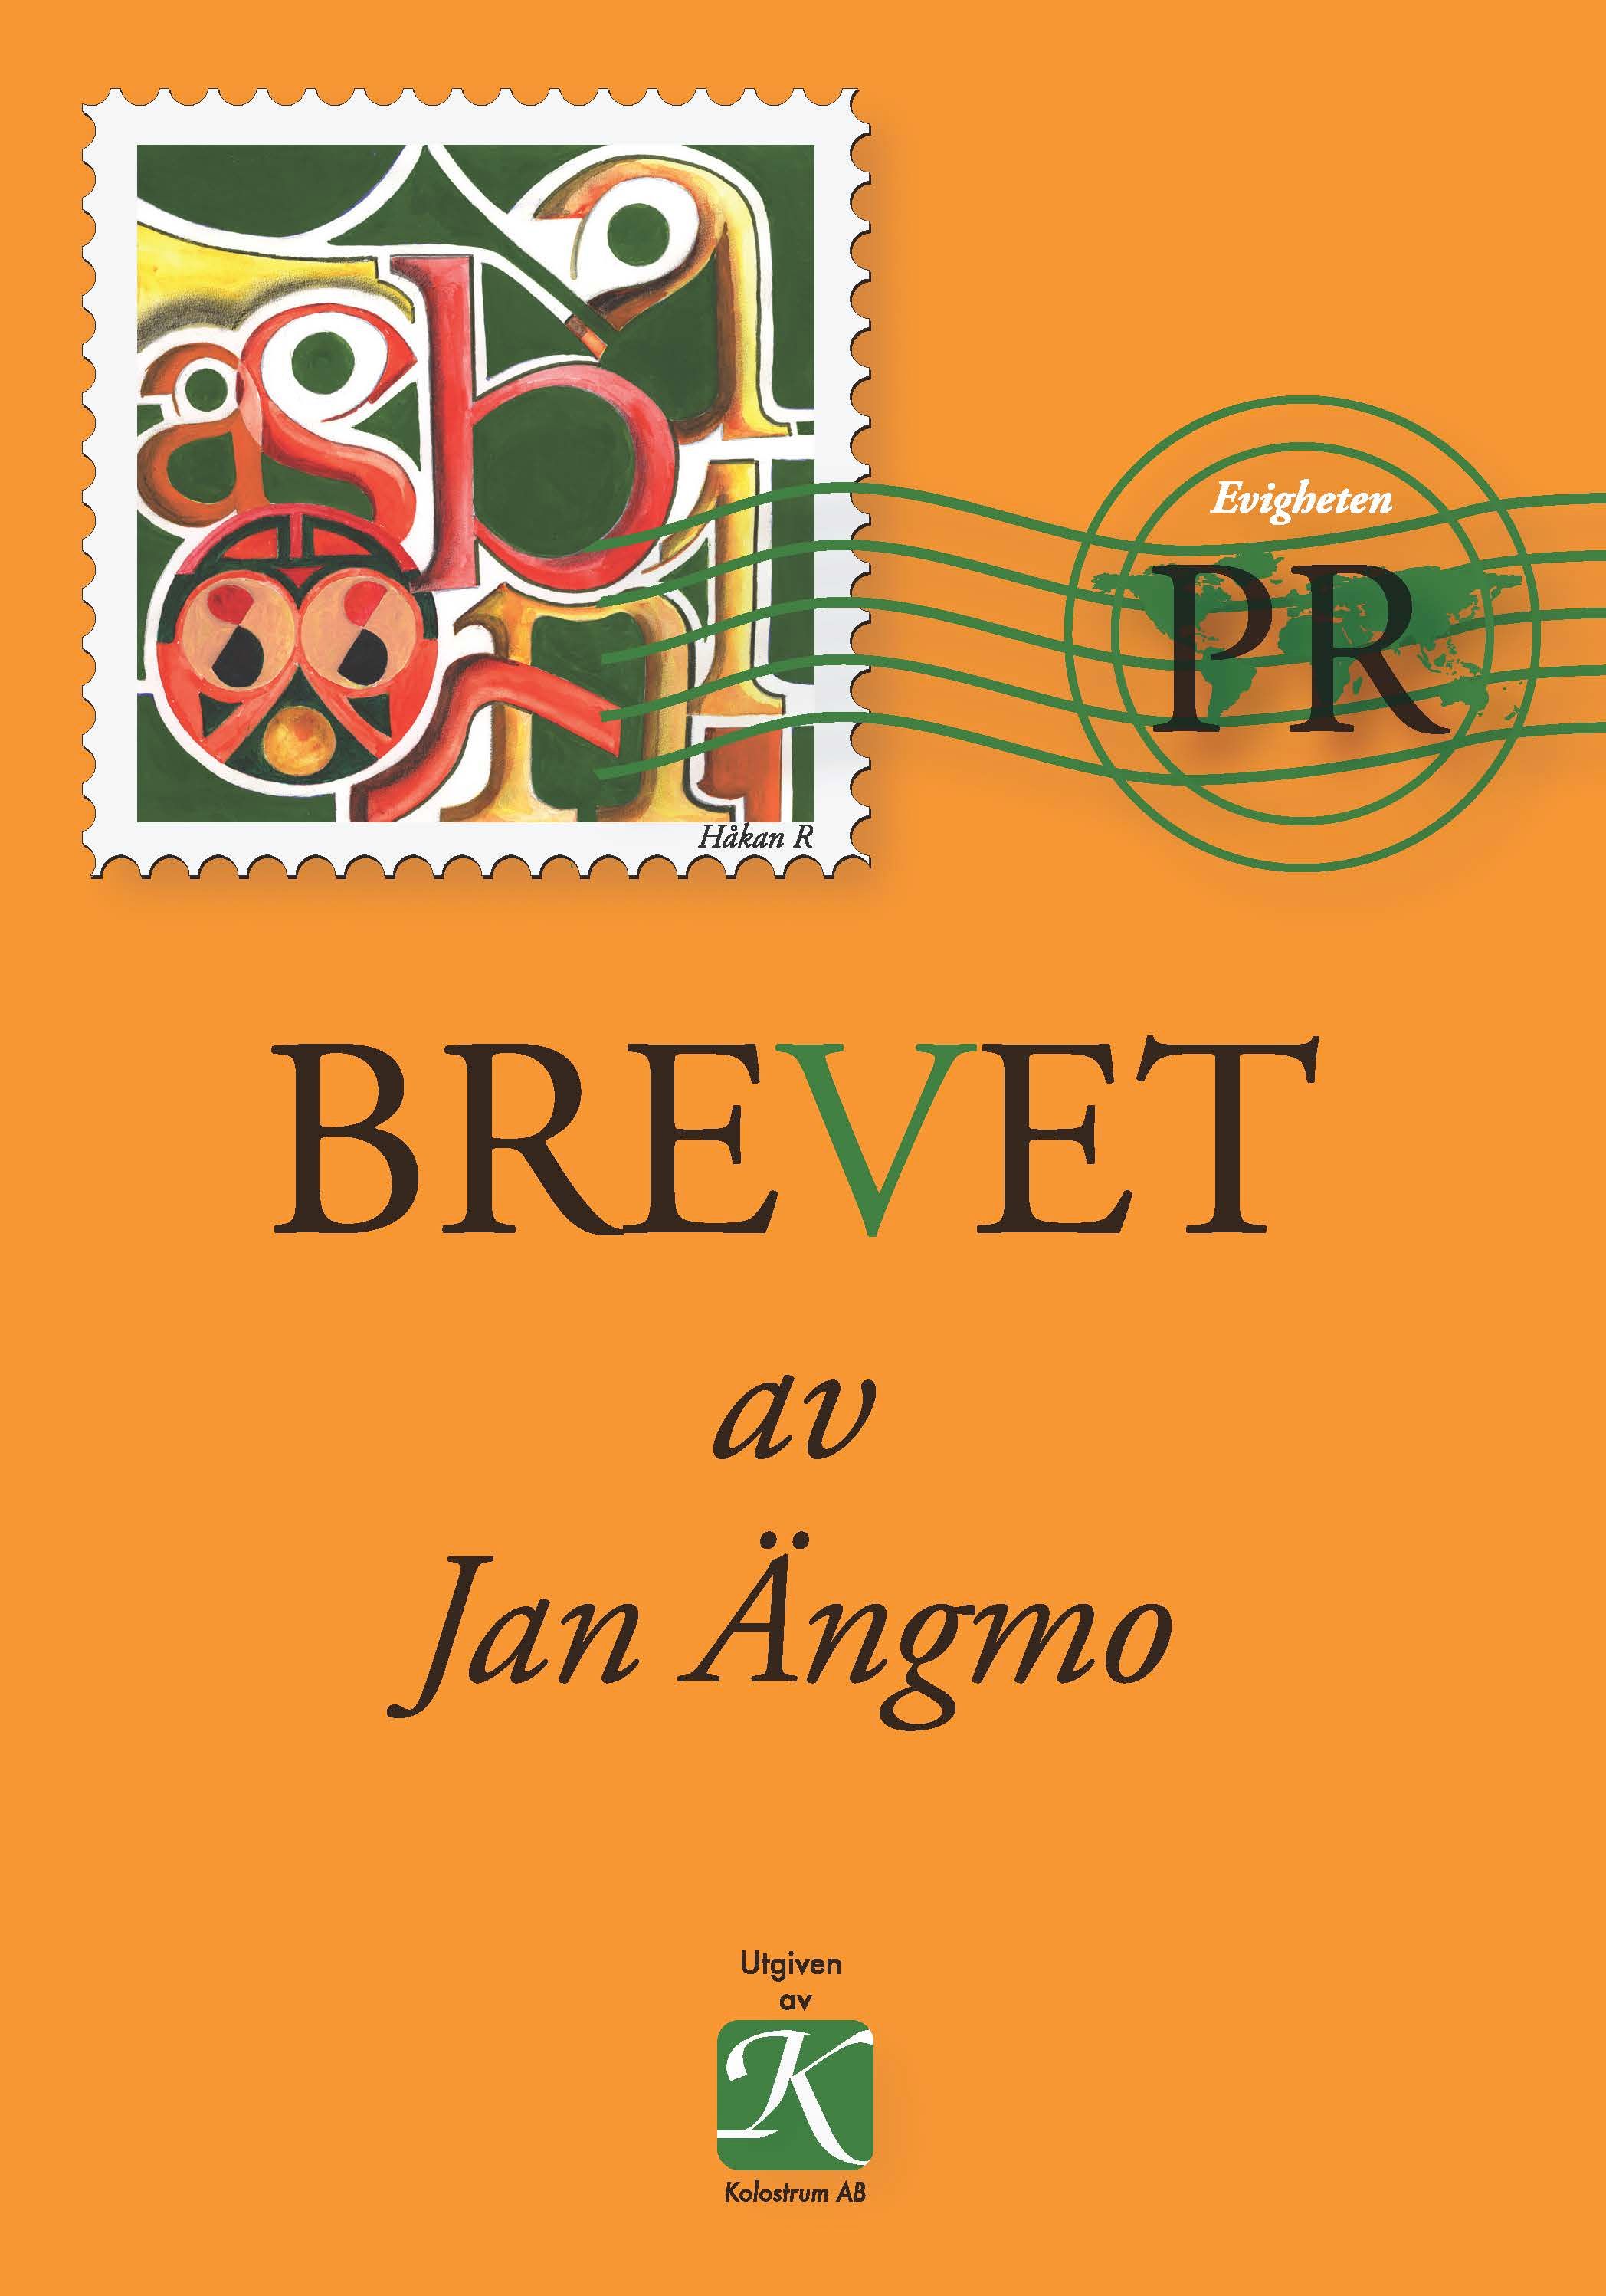 BREVET, eBook by Jan Ängmo